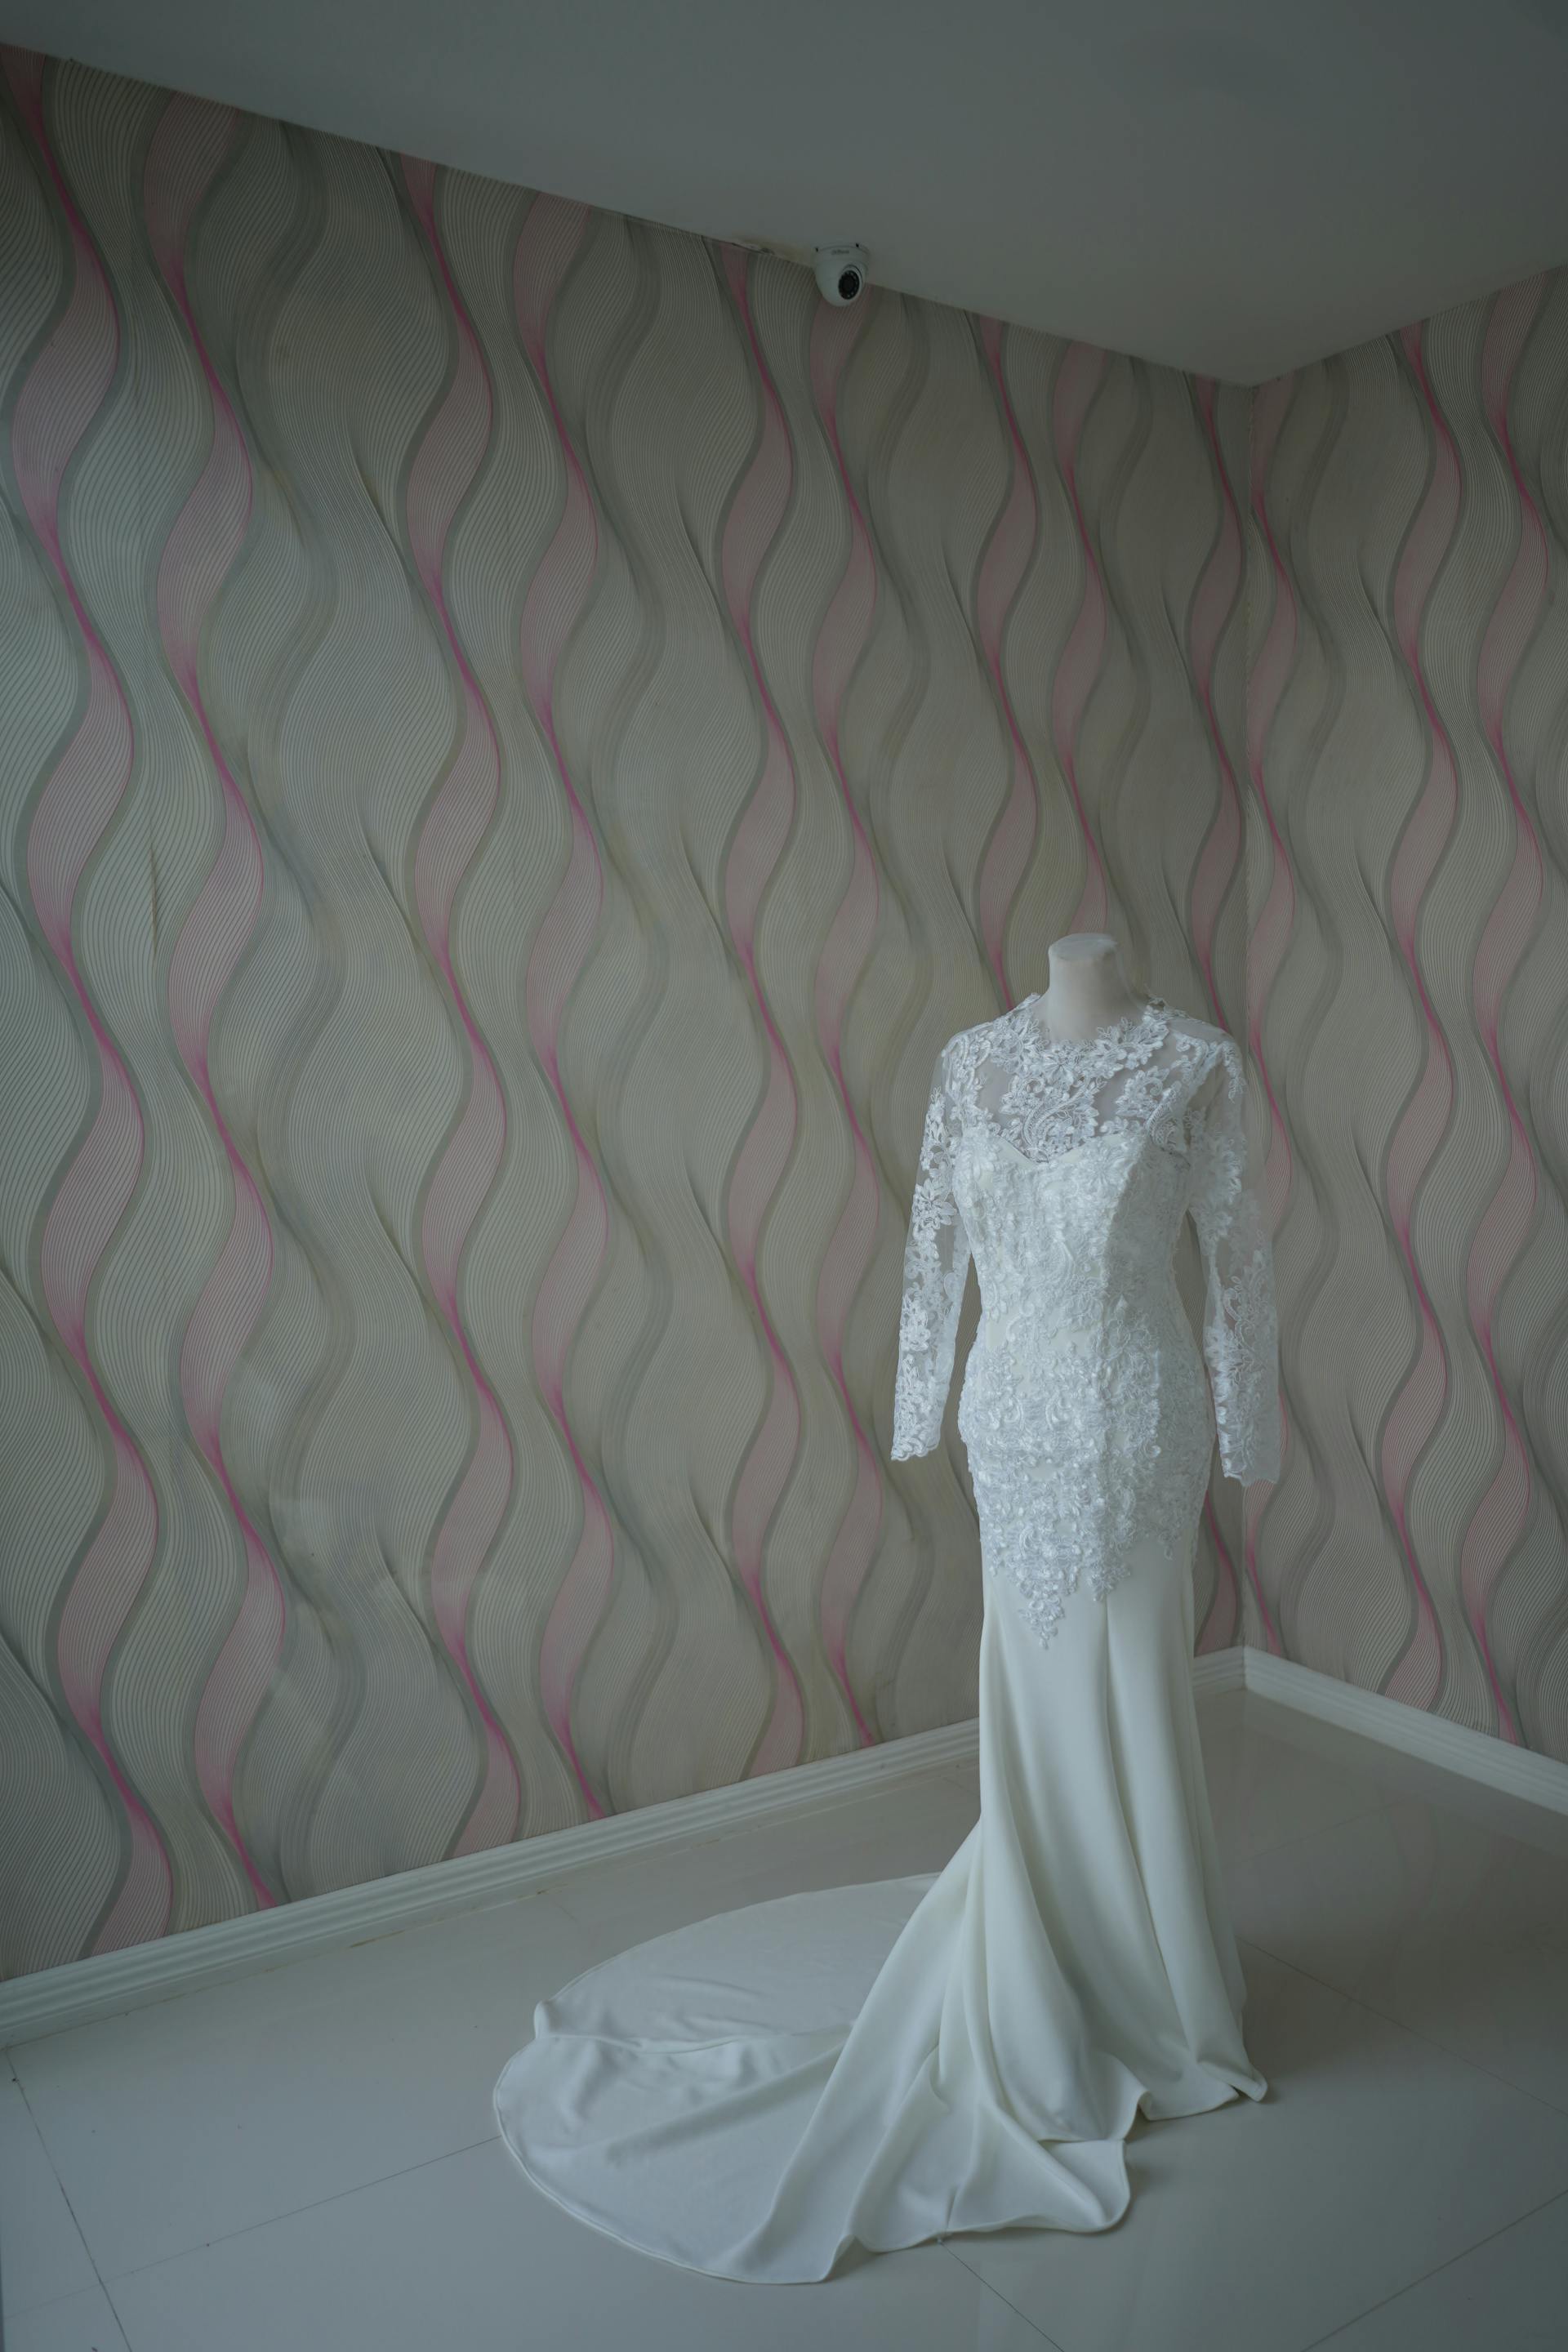 A wedding dress on a mannequin | Source: Pexels